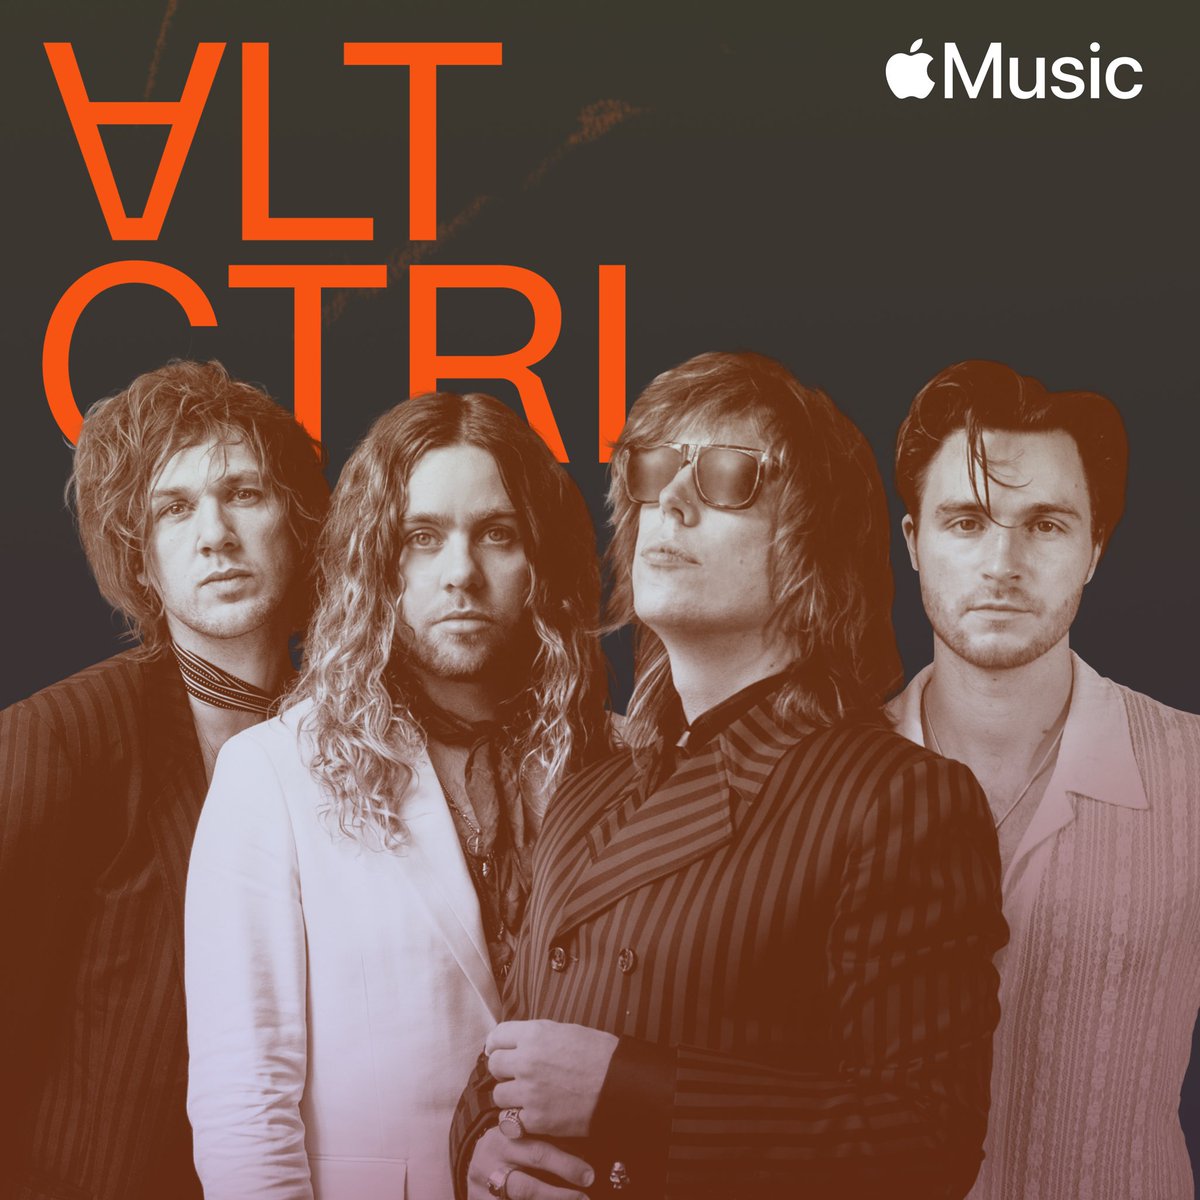 Thank you @applemusic for adding Pretty Vicious to #ALTCTRL. Listen now on Apple🖤 music.apple.com/us/playlist/al…